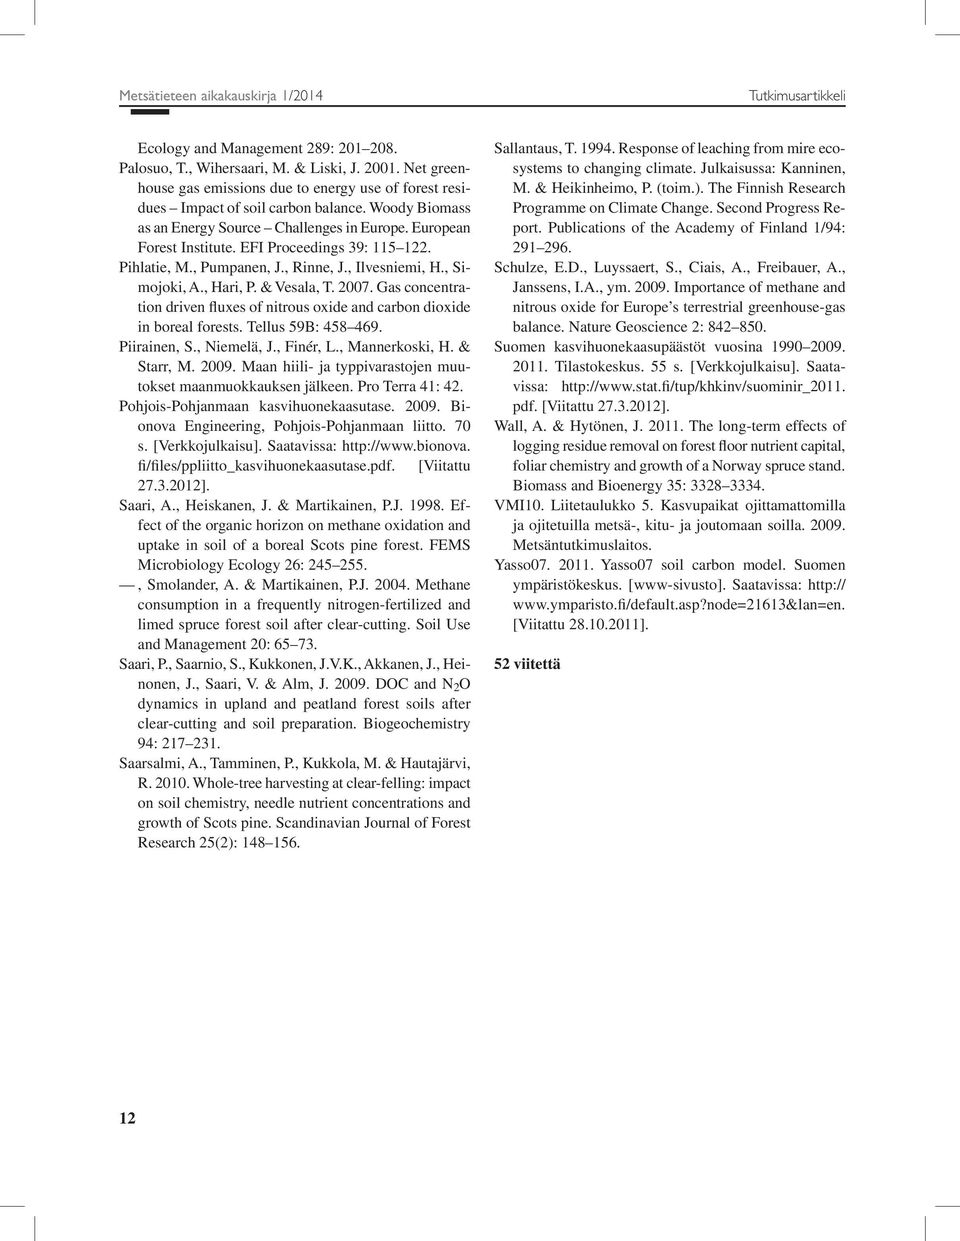 EFI Proceedings 39: 115 122. Pihlatie, M., Pumpanen, J., Rinne, J., Ilvesniemi, H., Simojoki, A., Hari, P. & Vesala, T. 2007.